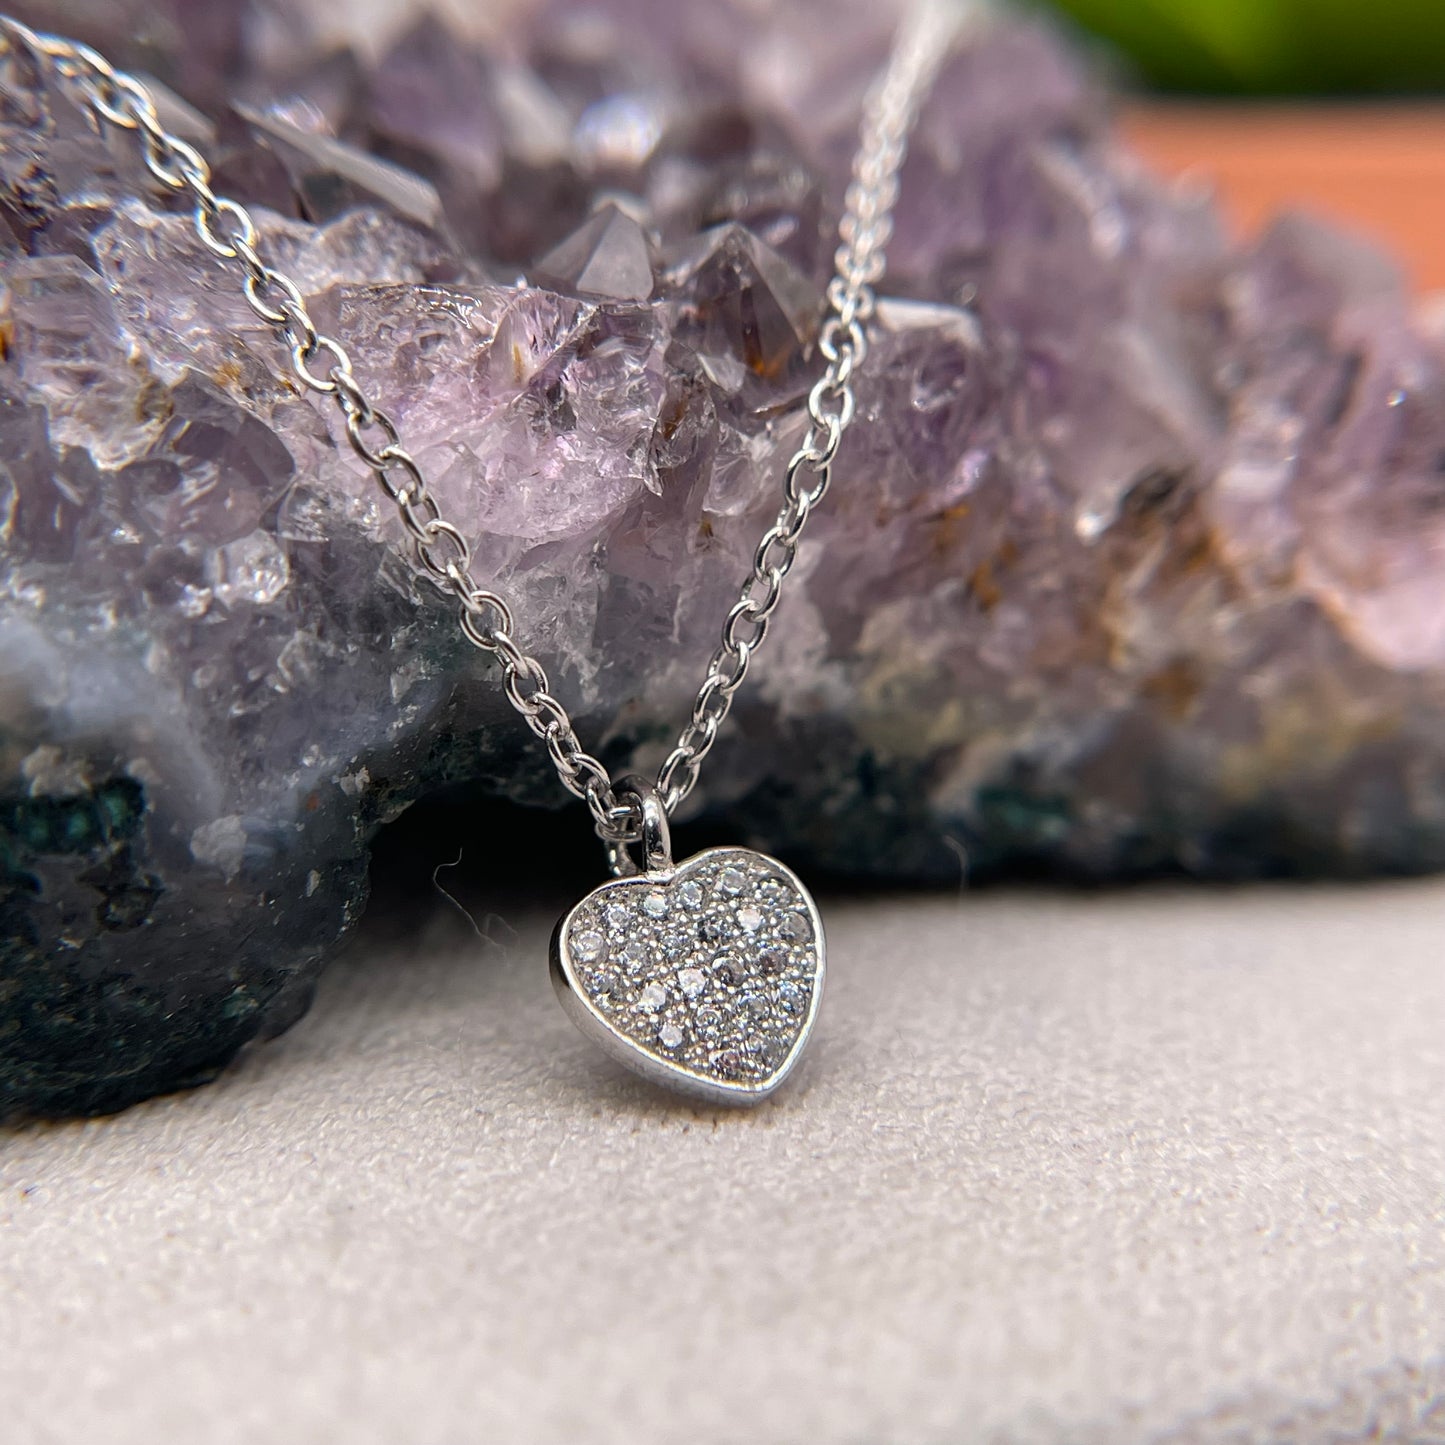 Minimalist Heart Silver Pendant 925 Sterling Silver Minimalist Heart Necklace 7x7